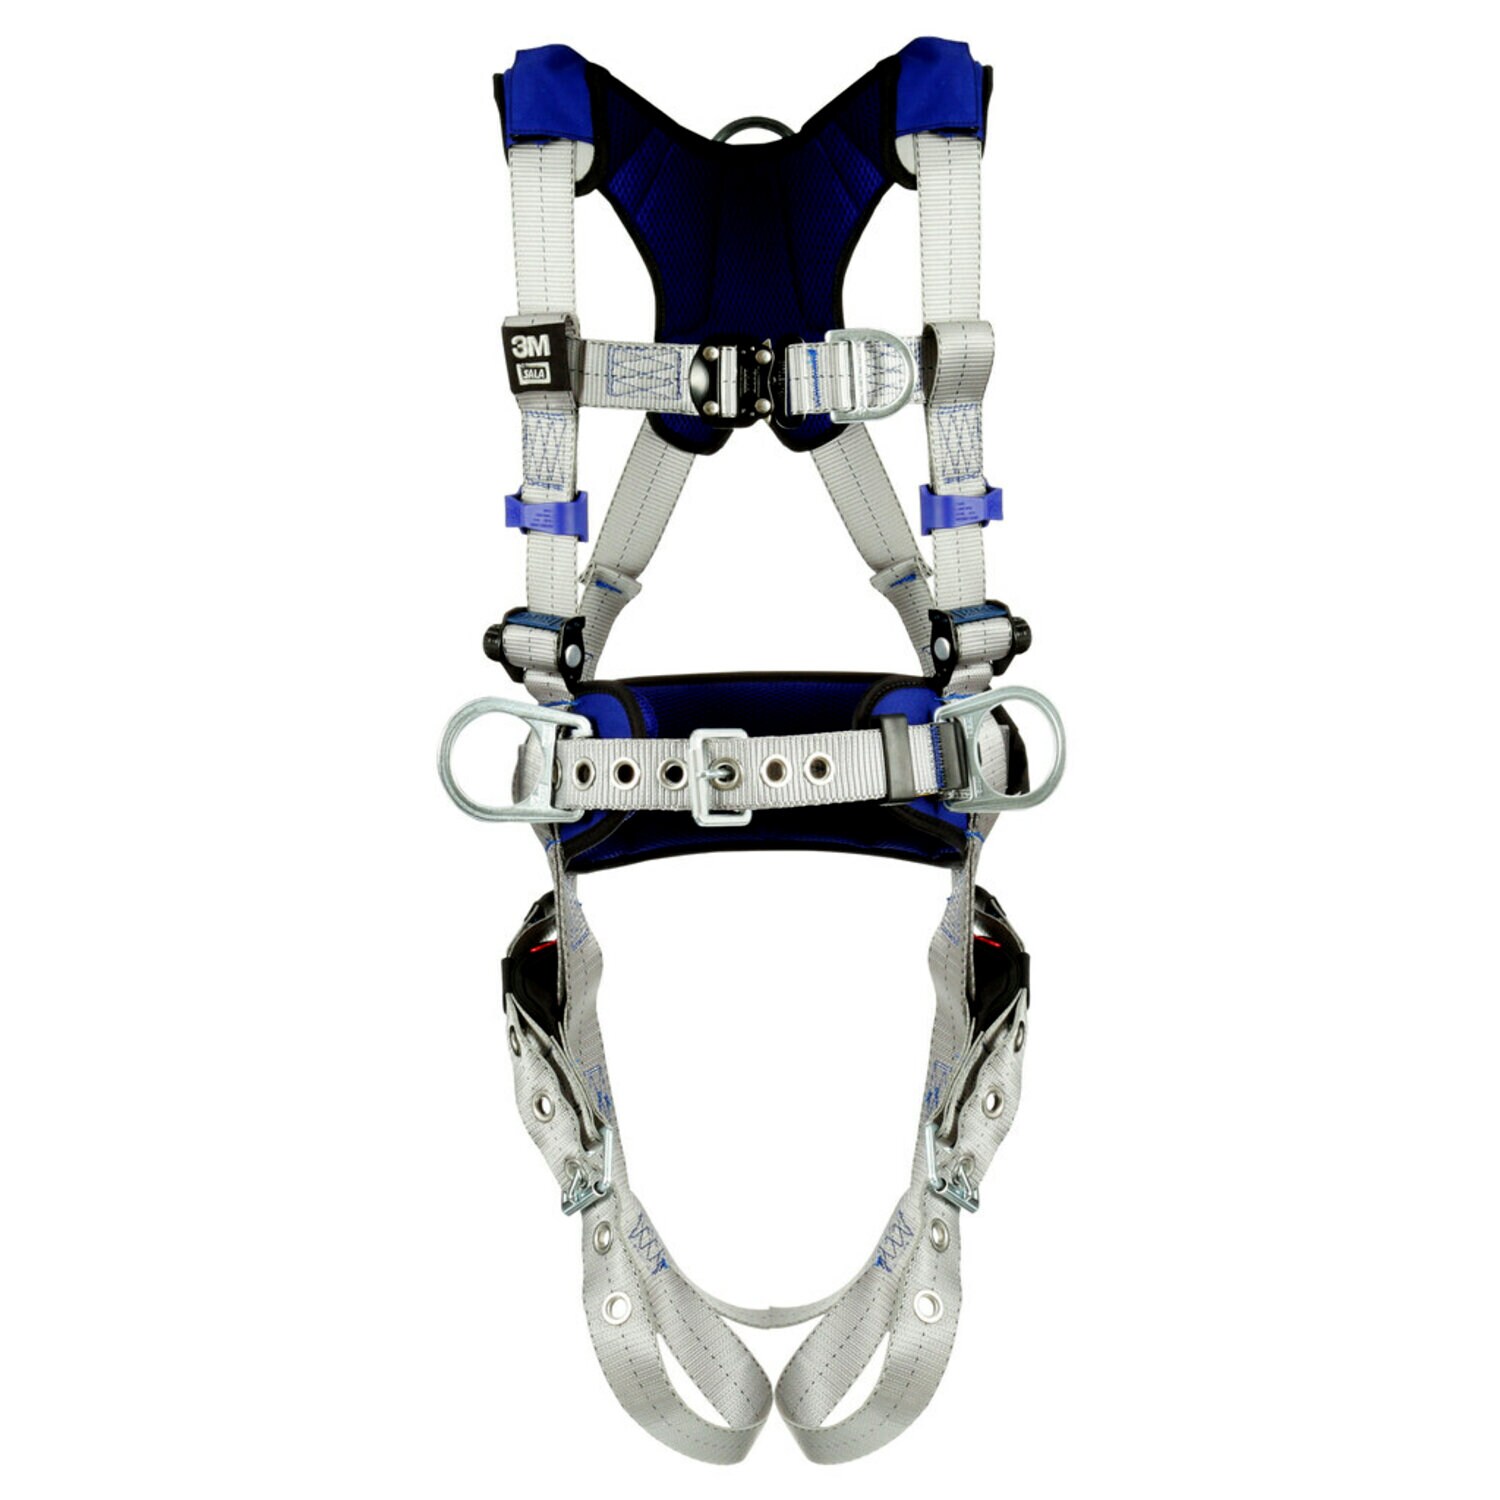 7012817615 - 3M DBI-SALA ExoFit X100 Comfort Construction Climbing/Positioning Safety Harness 1401137, Large